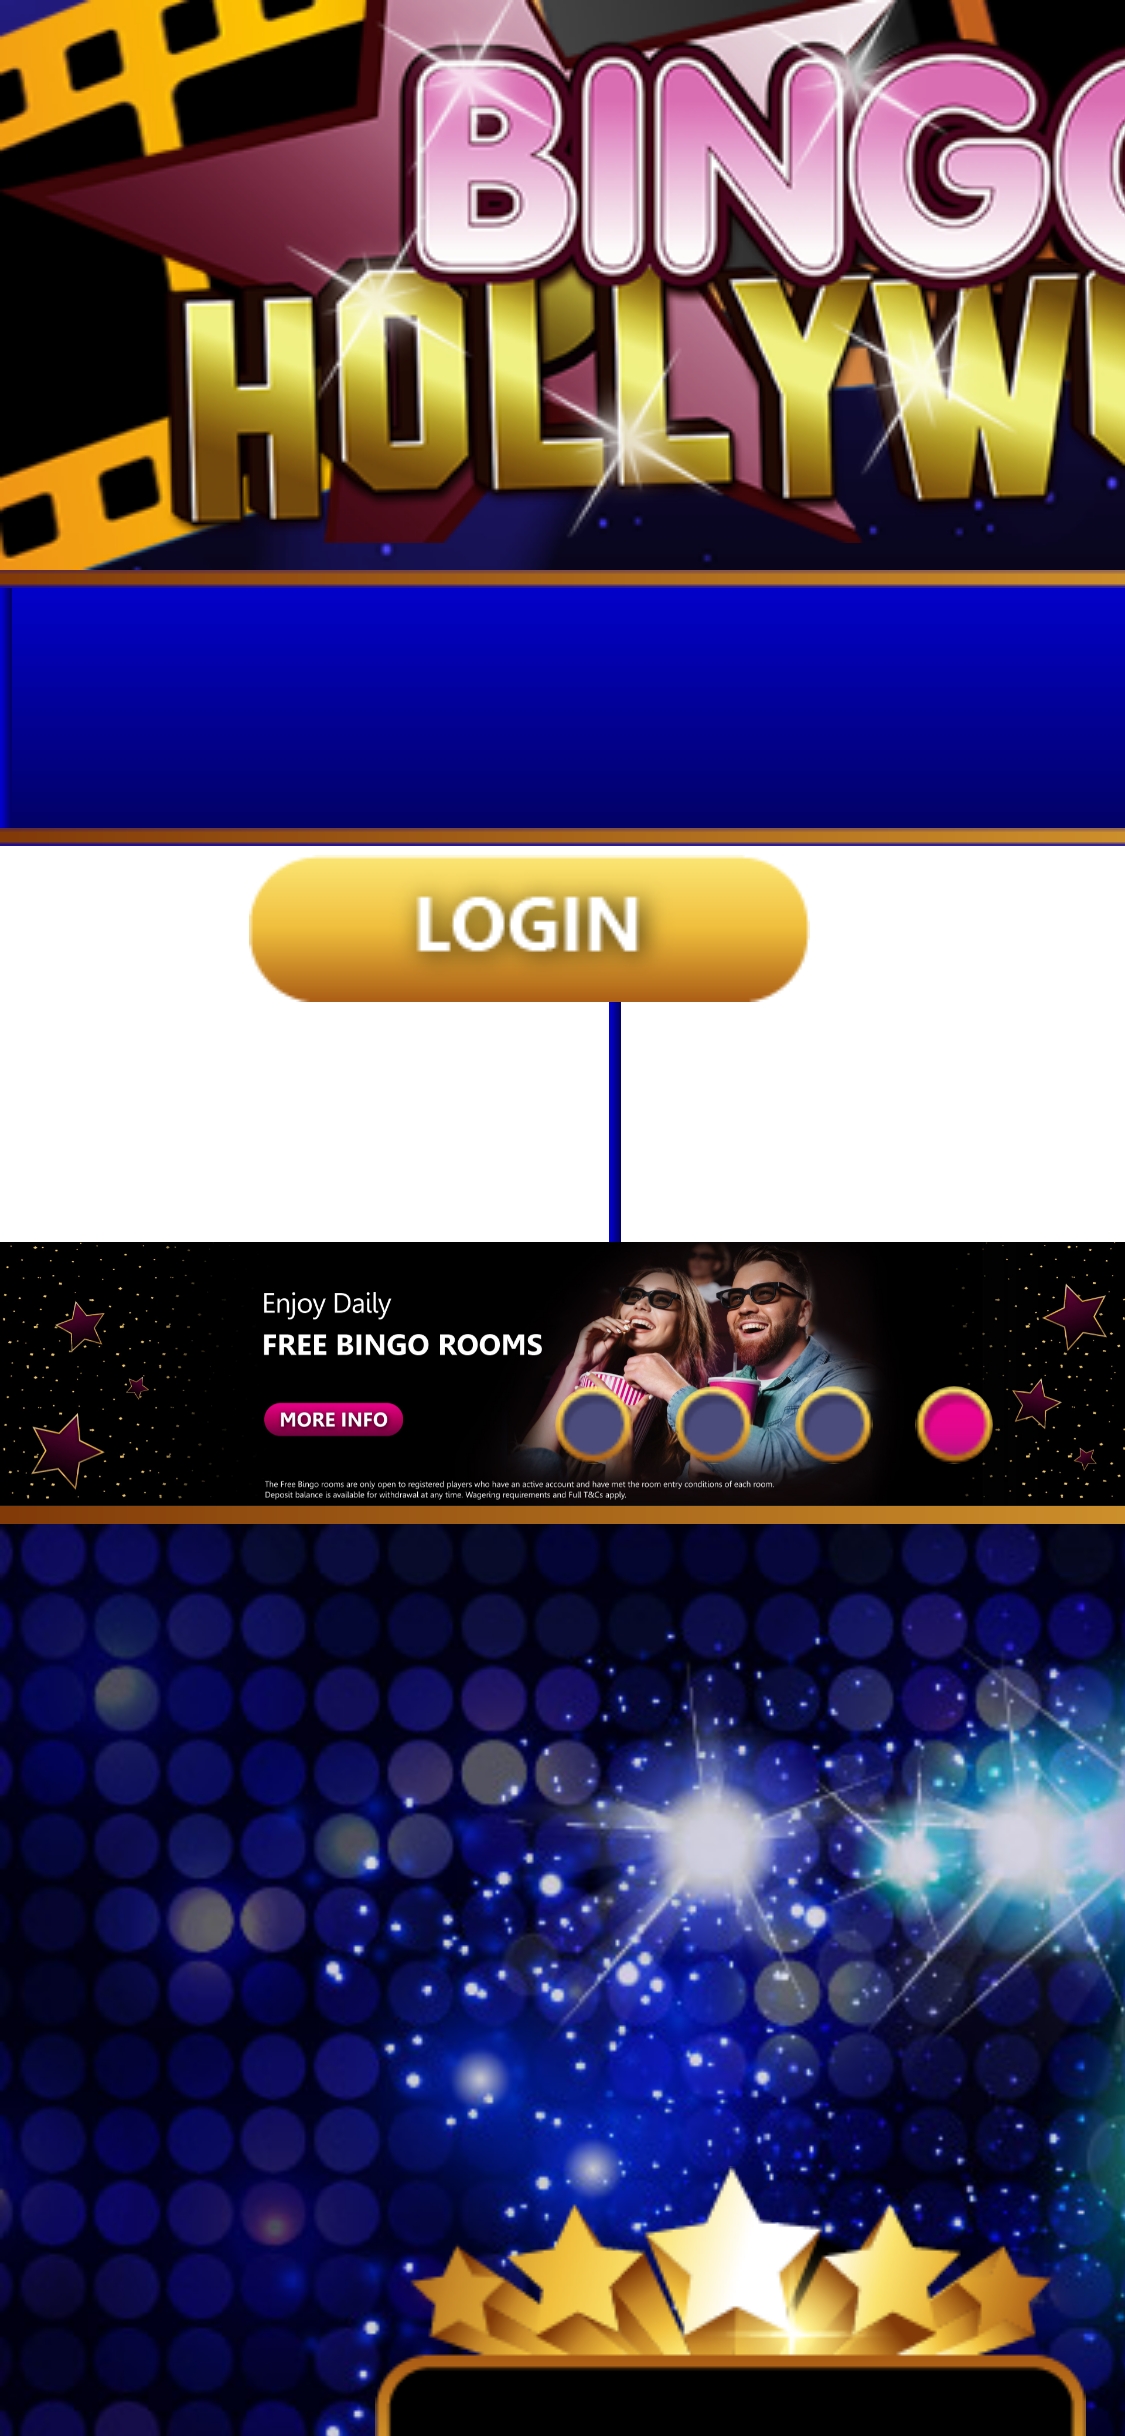 Bingo Hollywood Casino Mobile Review